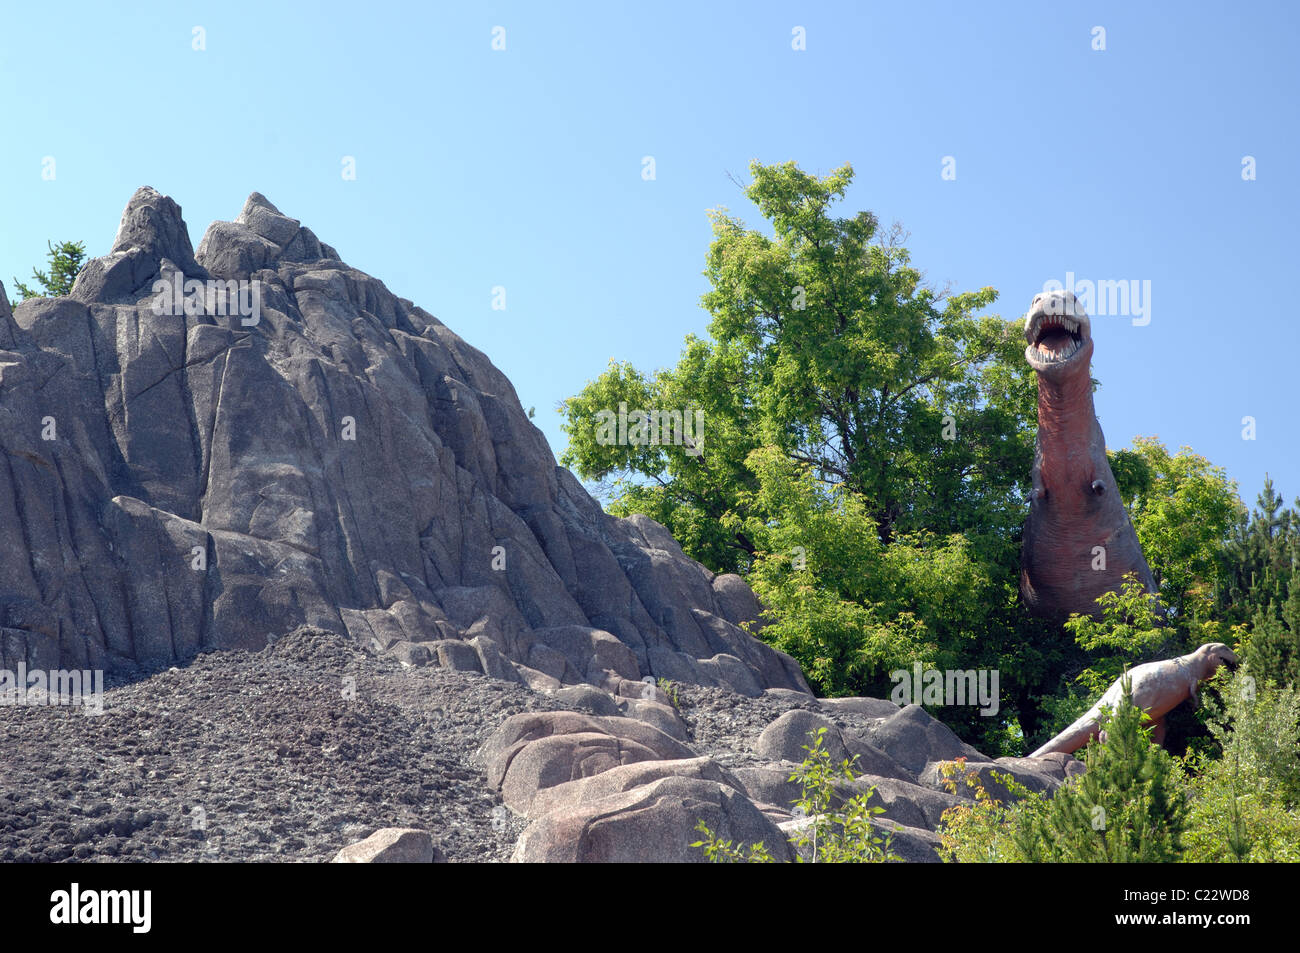 Tyrannosaurus Rex at the Calgary Zoo Prehistoric Park, Alberta, Canada Stock Photo